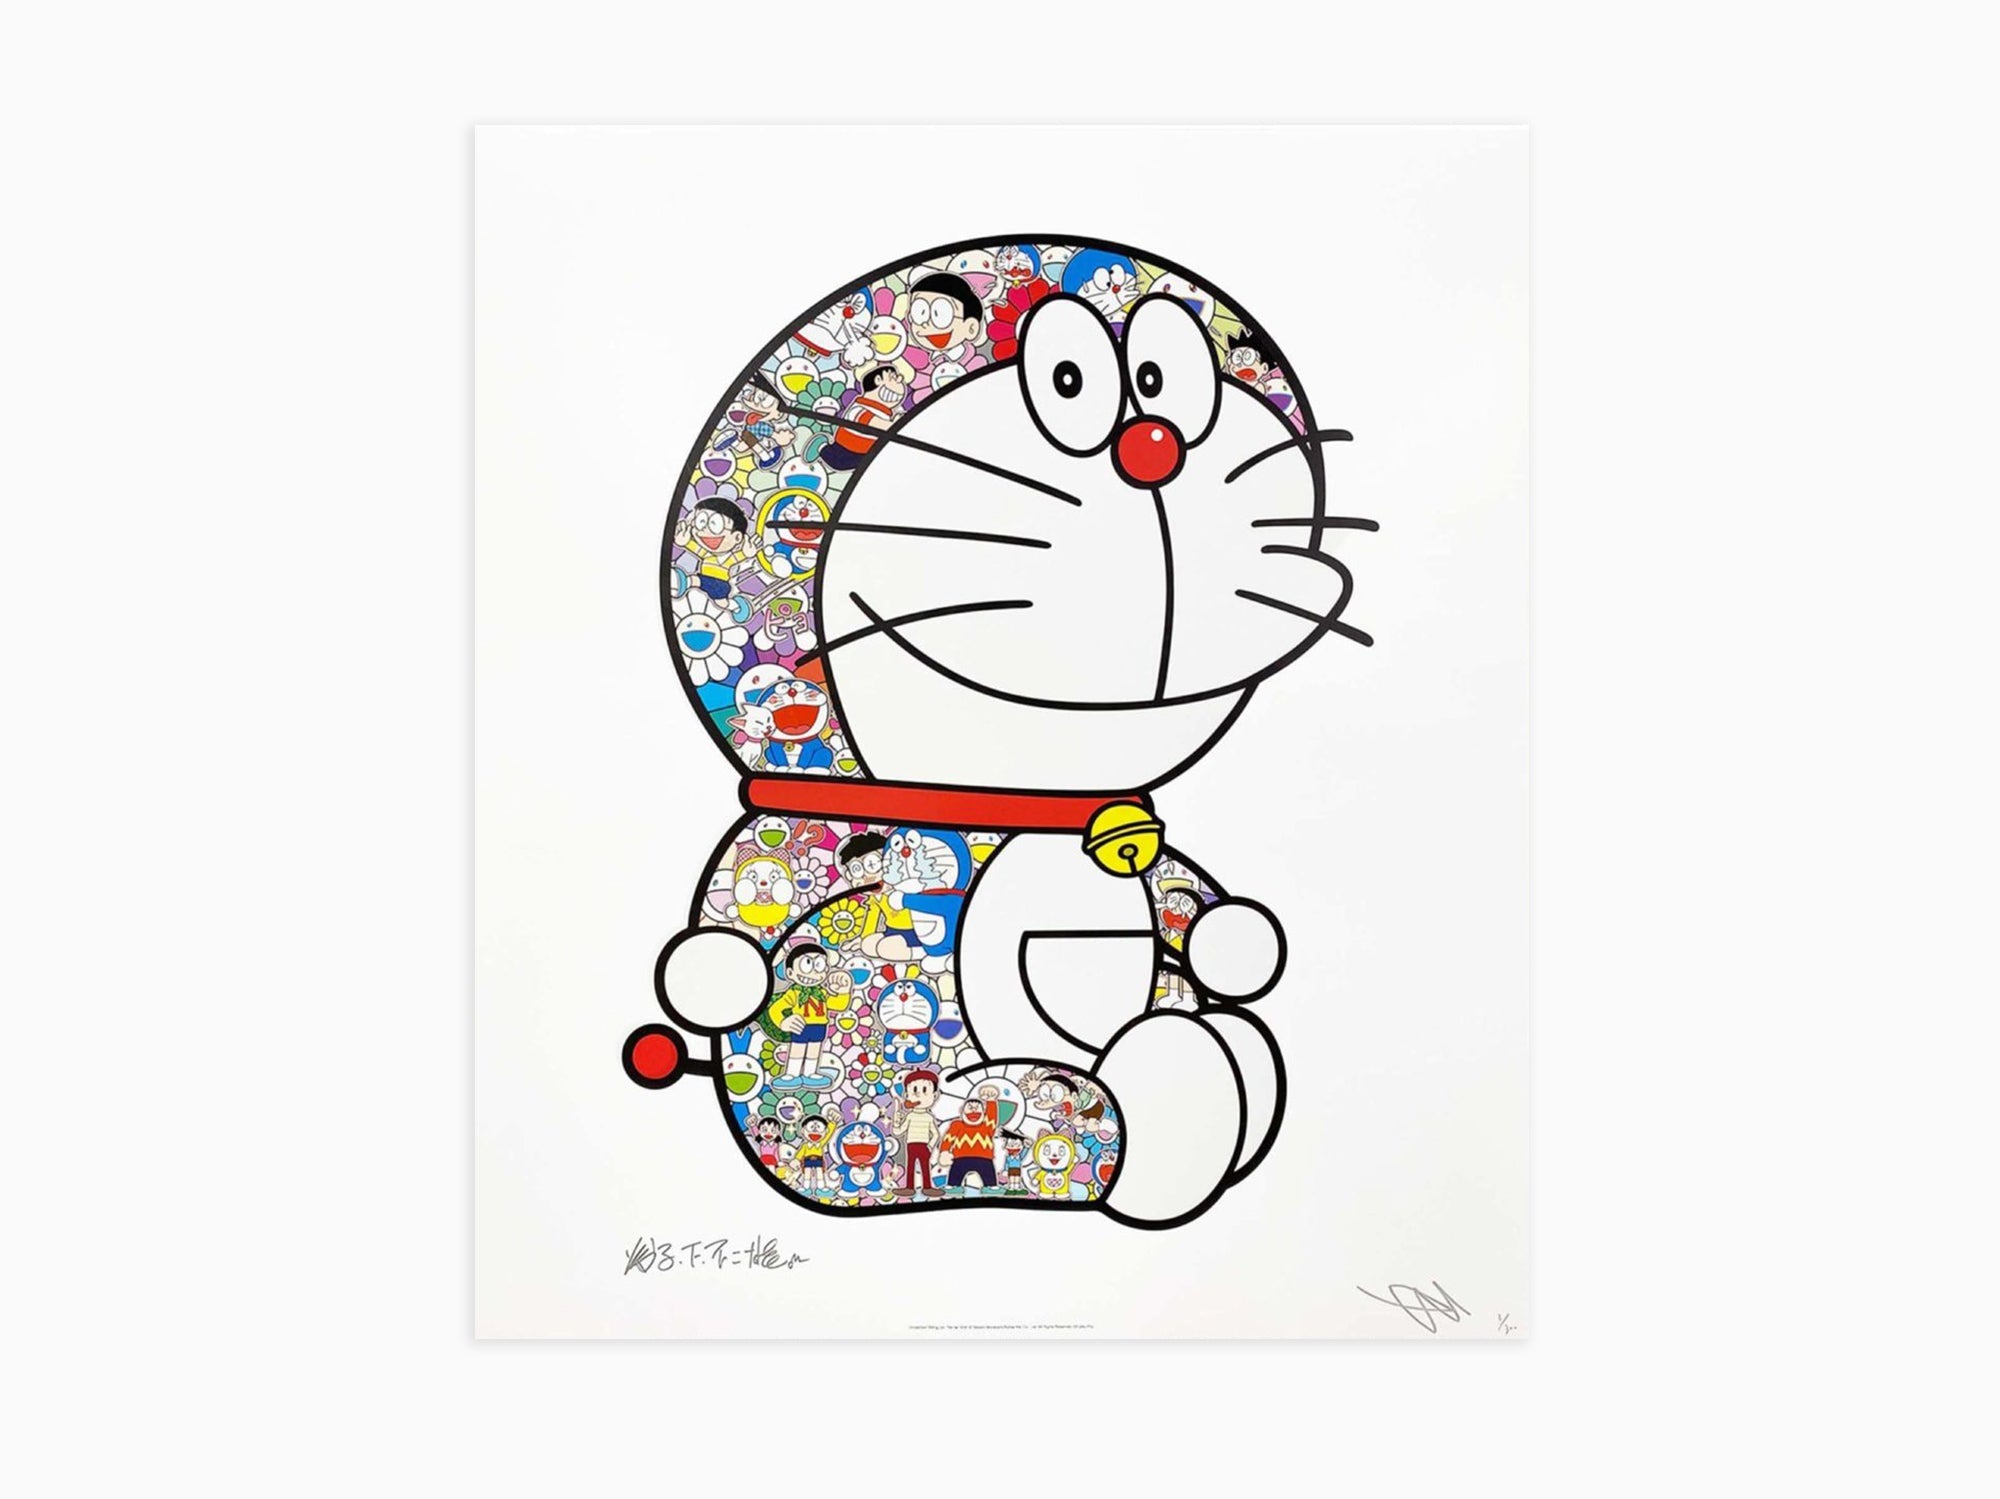 Takashi Murakami - Doraemon assis : "He-he"